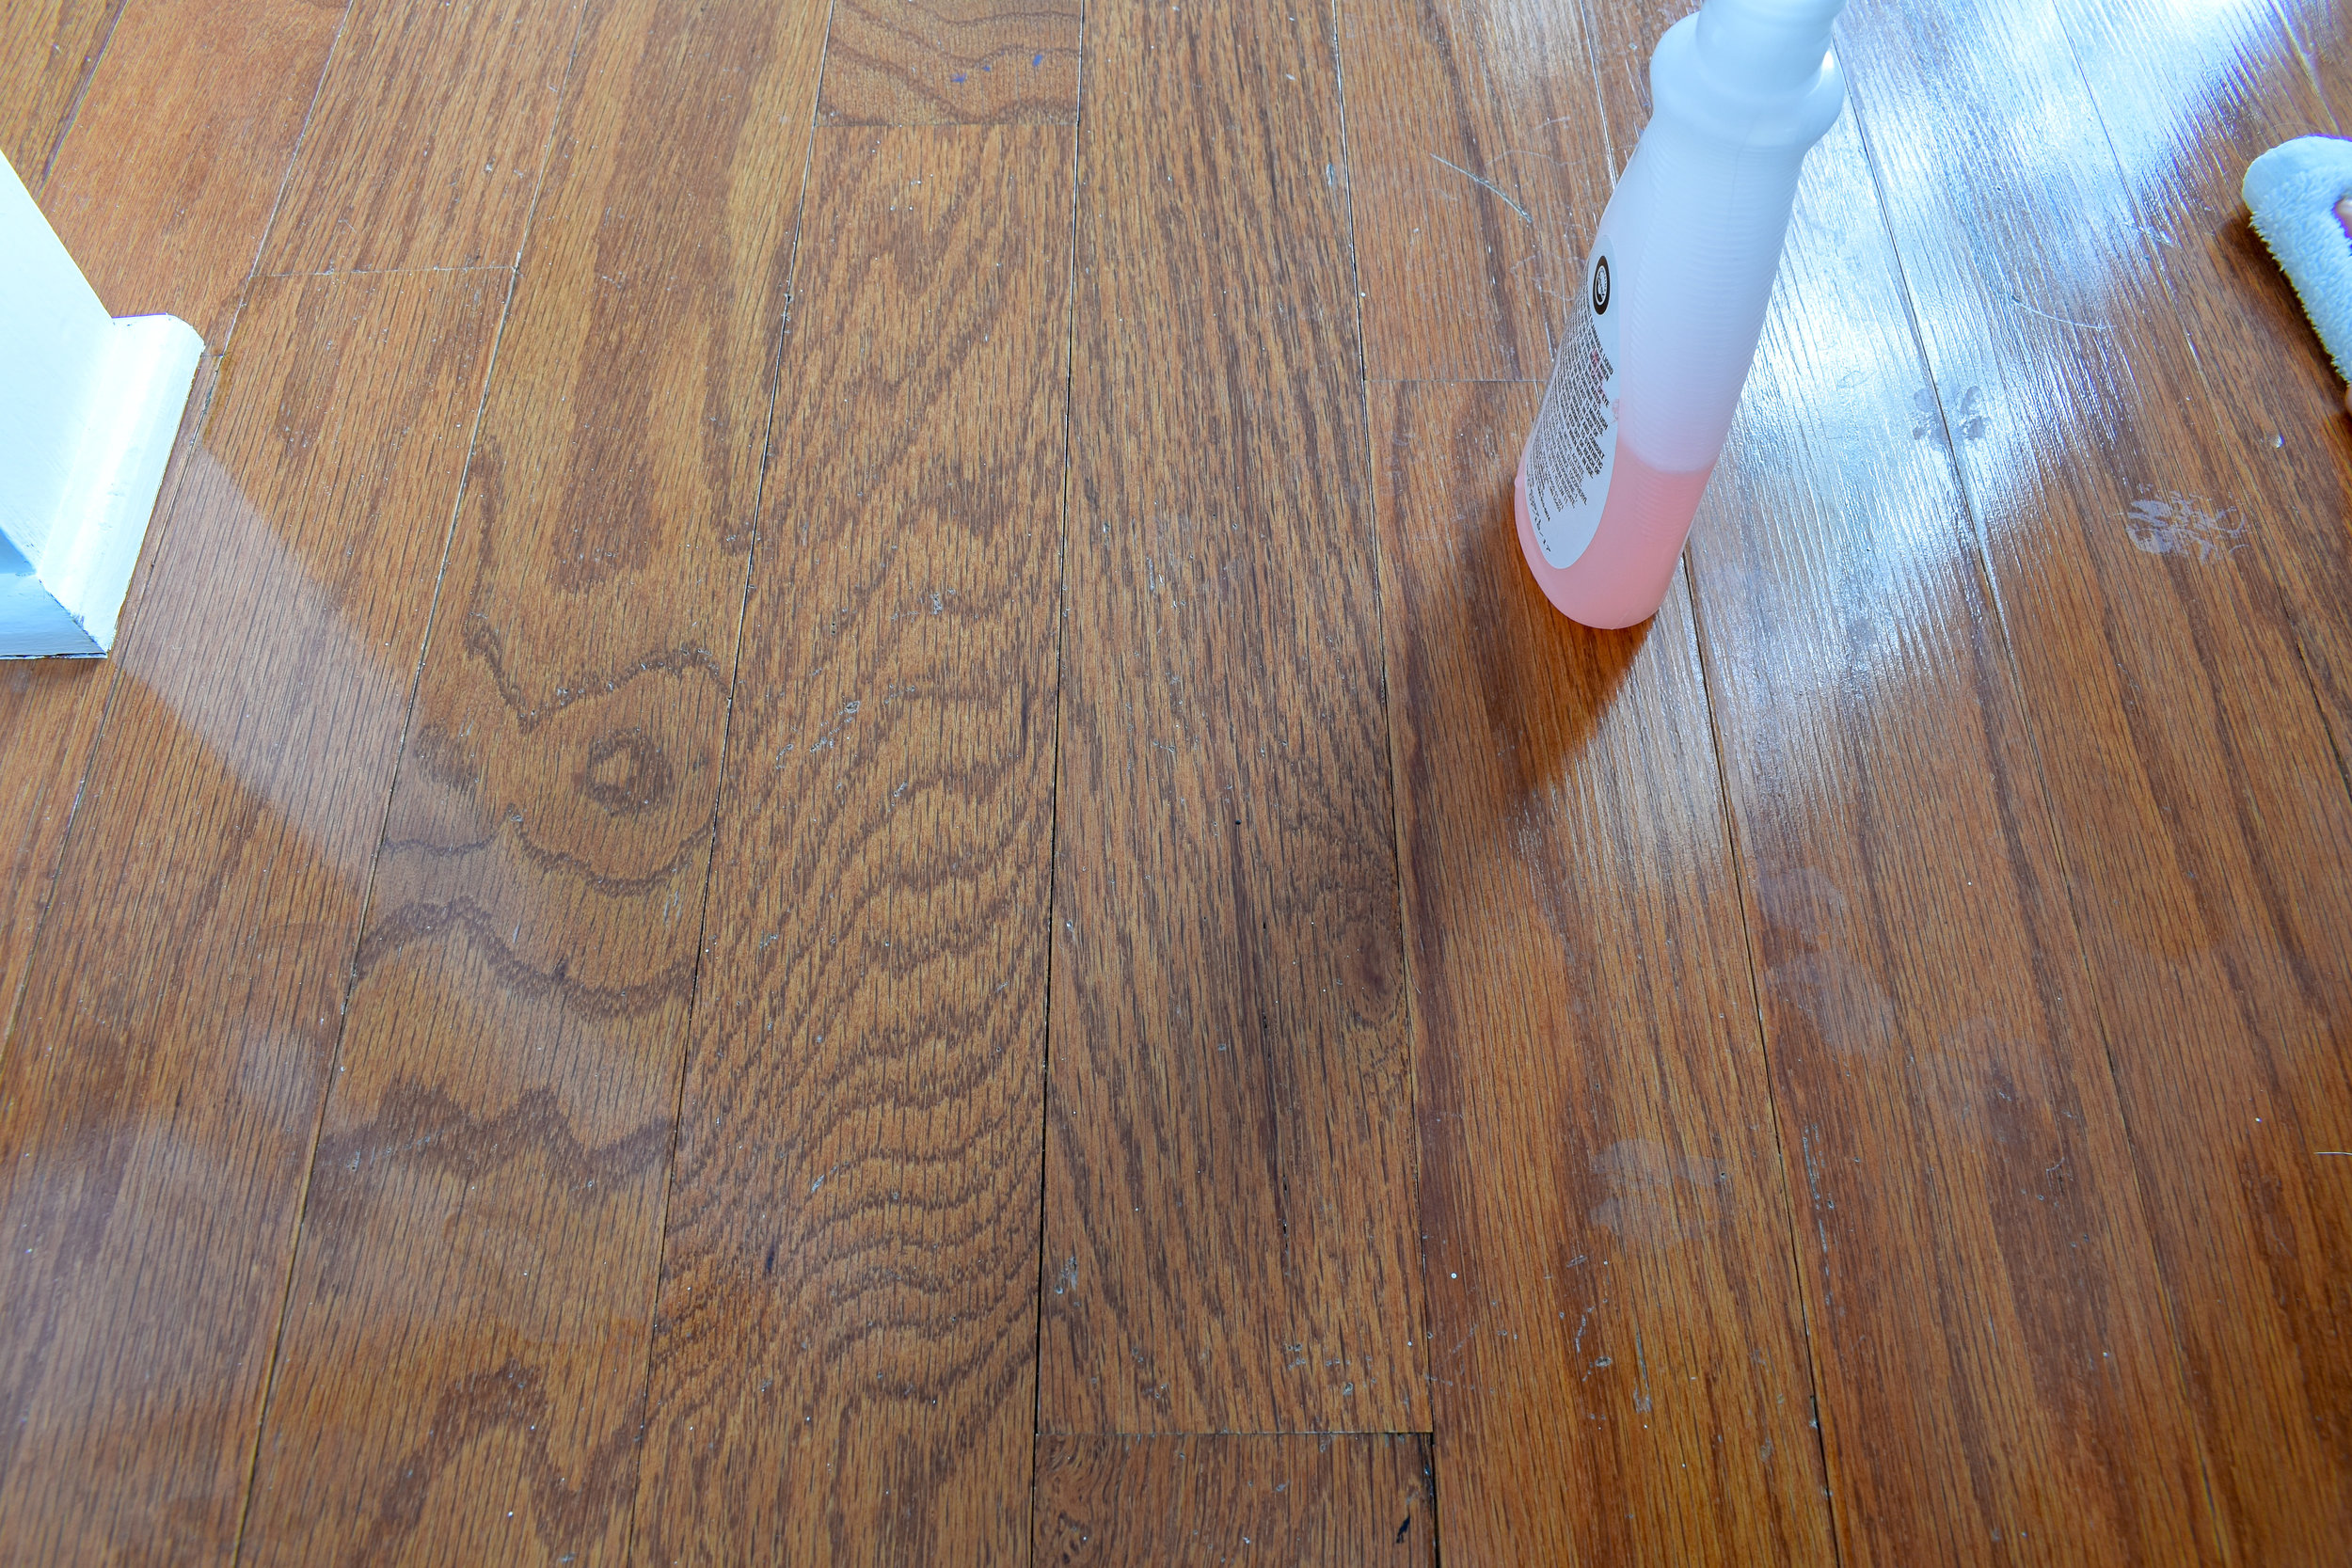 How To Make Old Hardwood Floors Shine, How To Fix Old Hardwood Floors